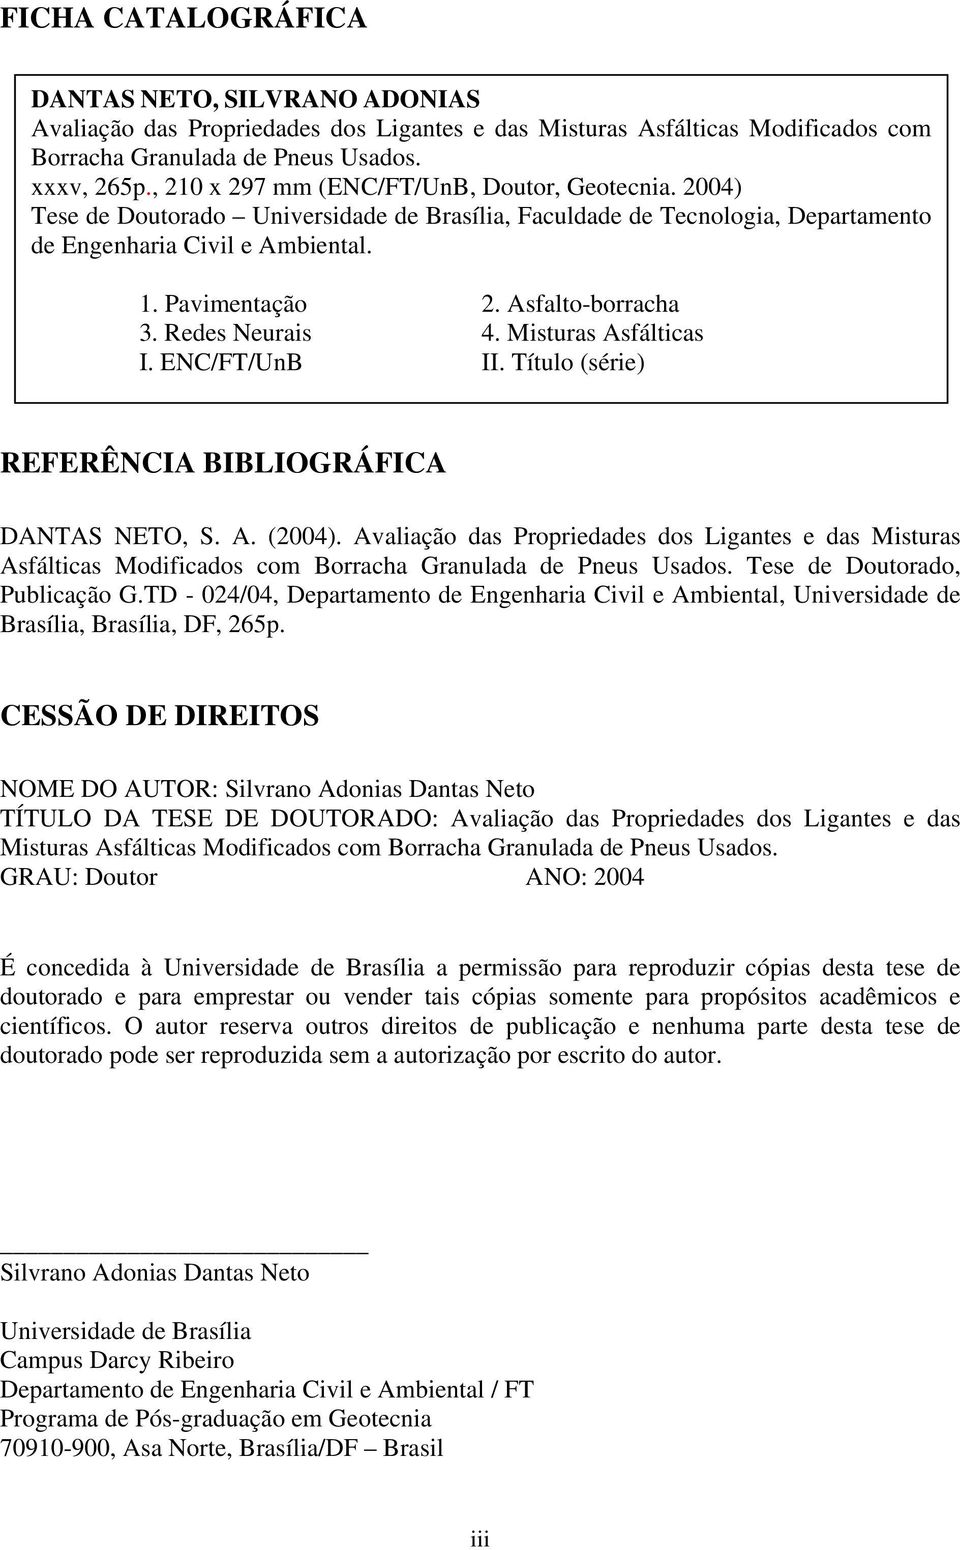 Asfalto-borracha 3. Redes Neurais 4. Misturas Asfálticas I. ENC/FT/UnB II. Título (série) REFERÊNCIA BIBLIOGRÁFICA DANTAS NETO, S. A. (2004).